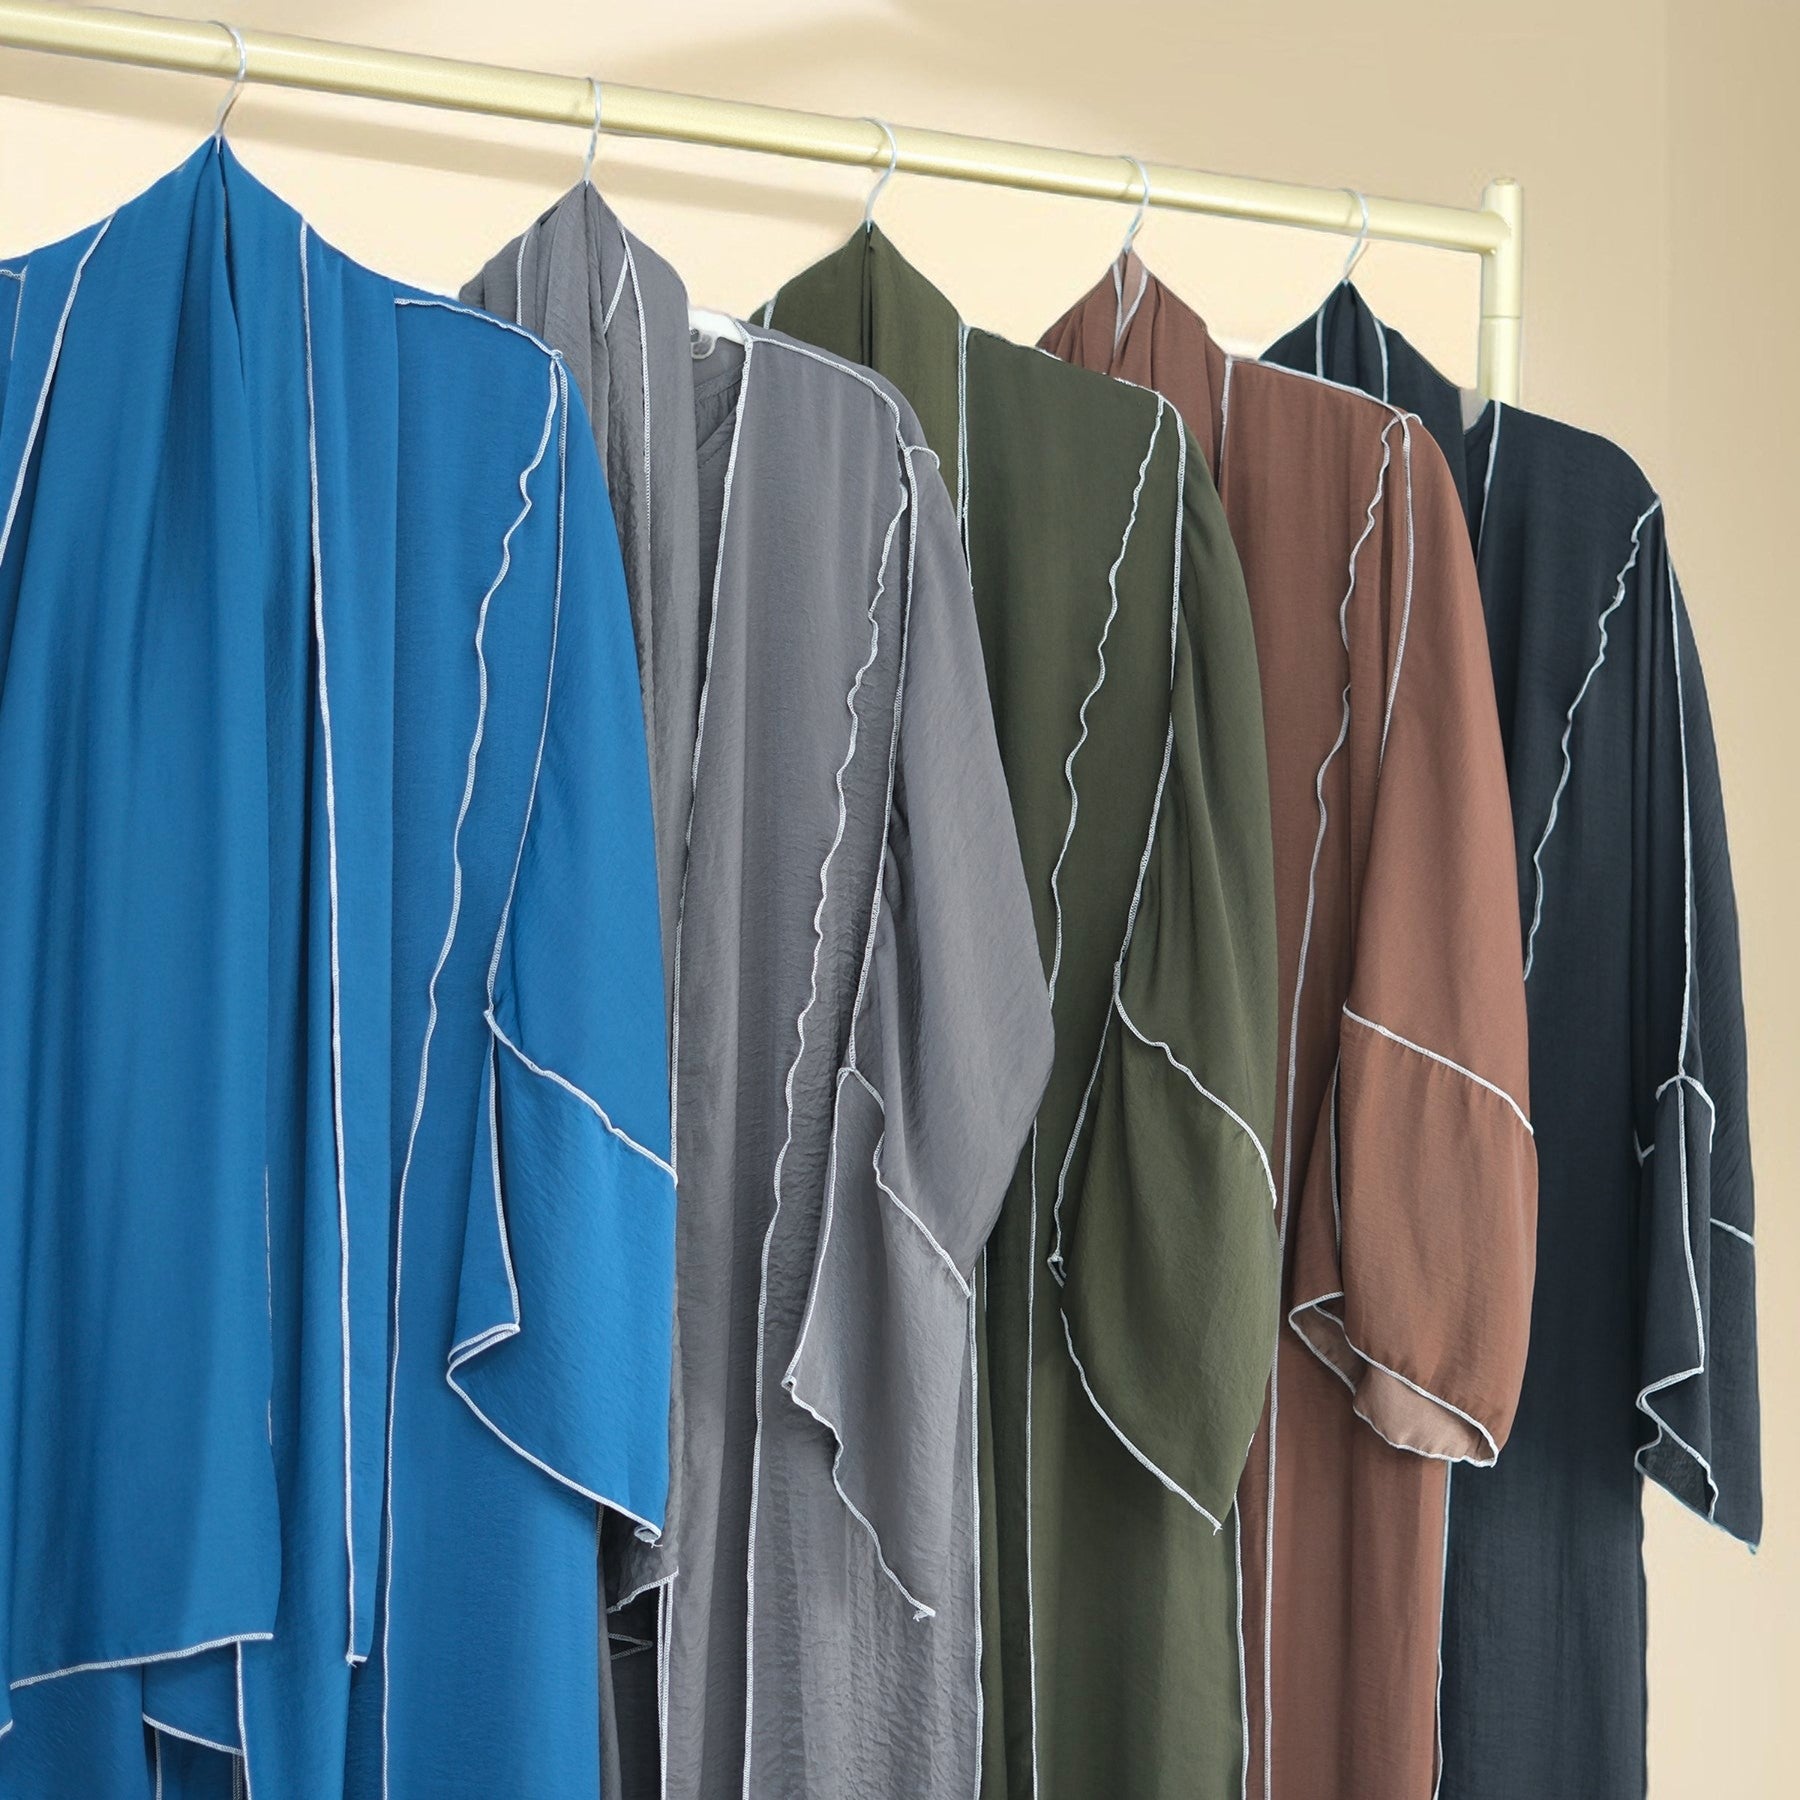 Elegant Wrinkle Satin Abaya Set with detachable belt - Try Modest Limited 